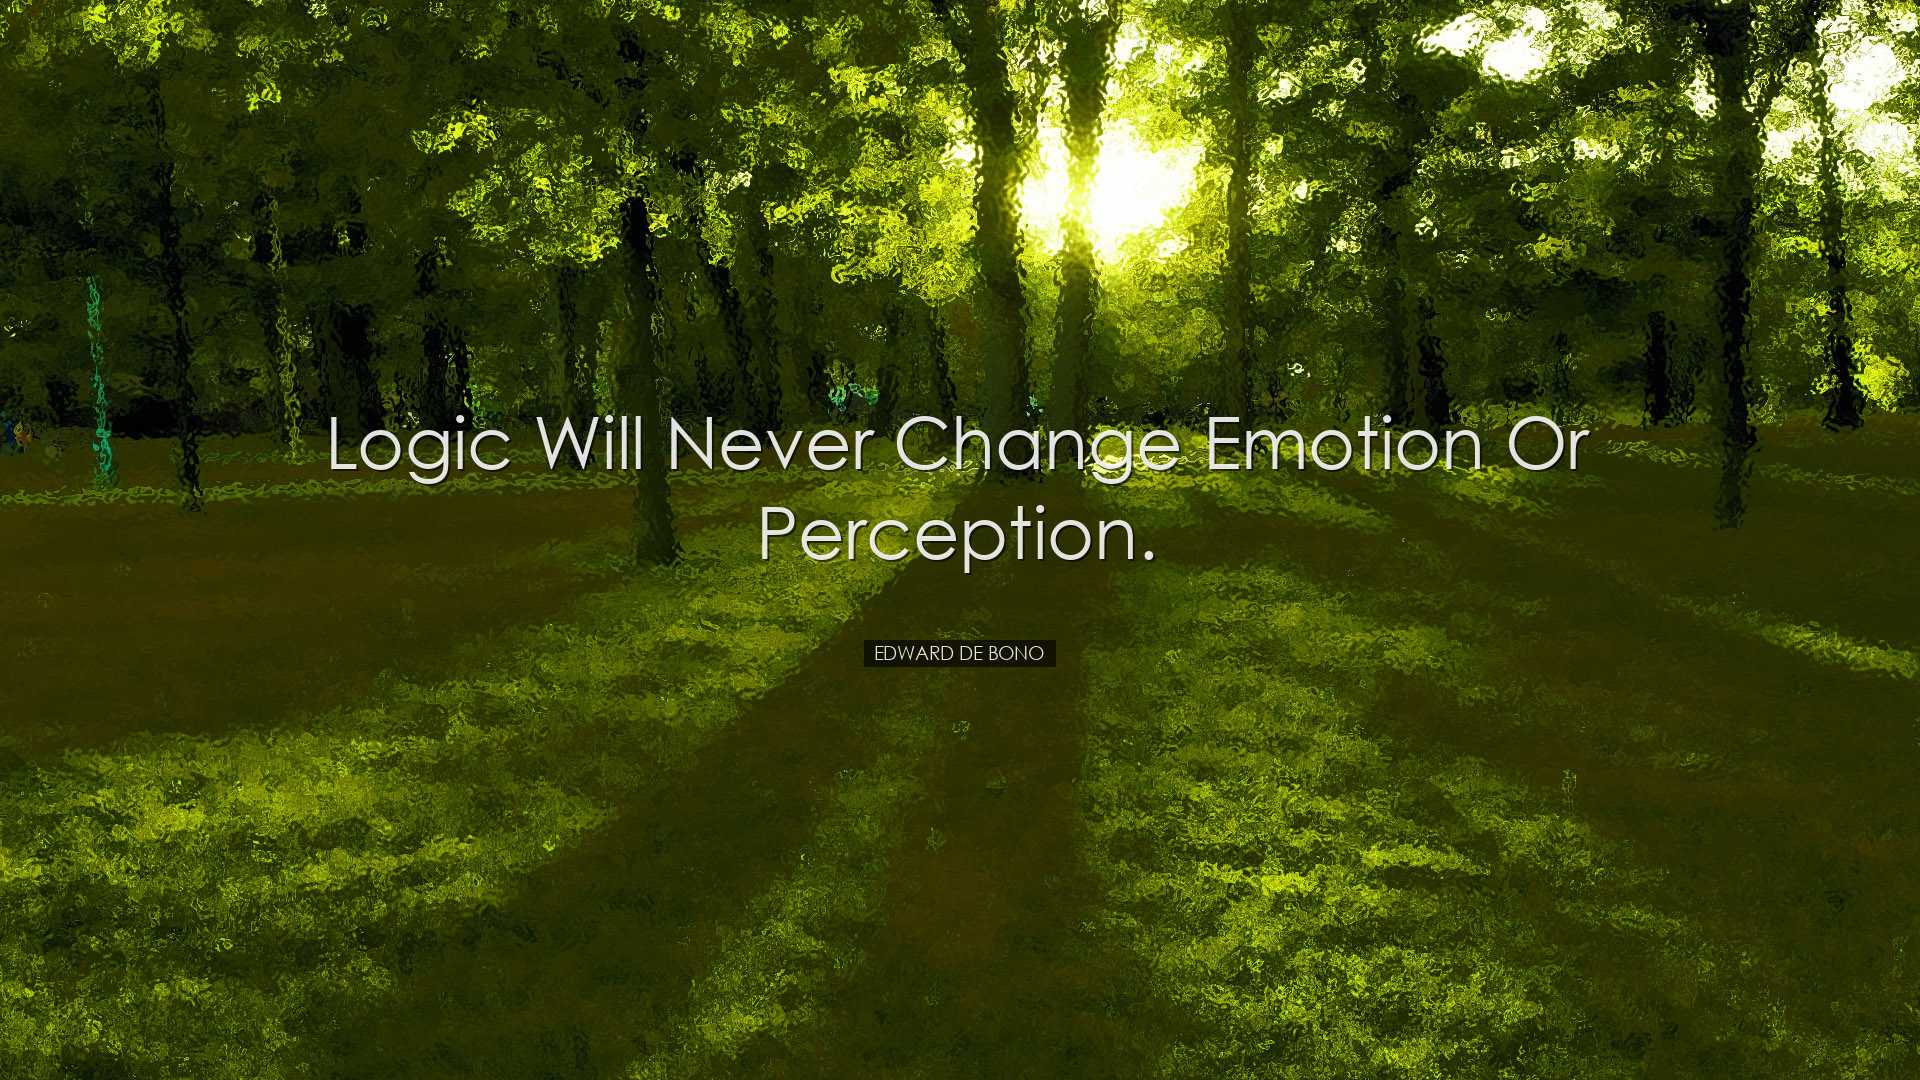 Logic will never change emotion or perception. - Edward de Bono